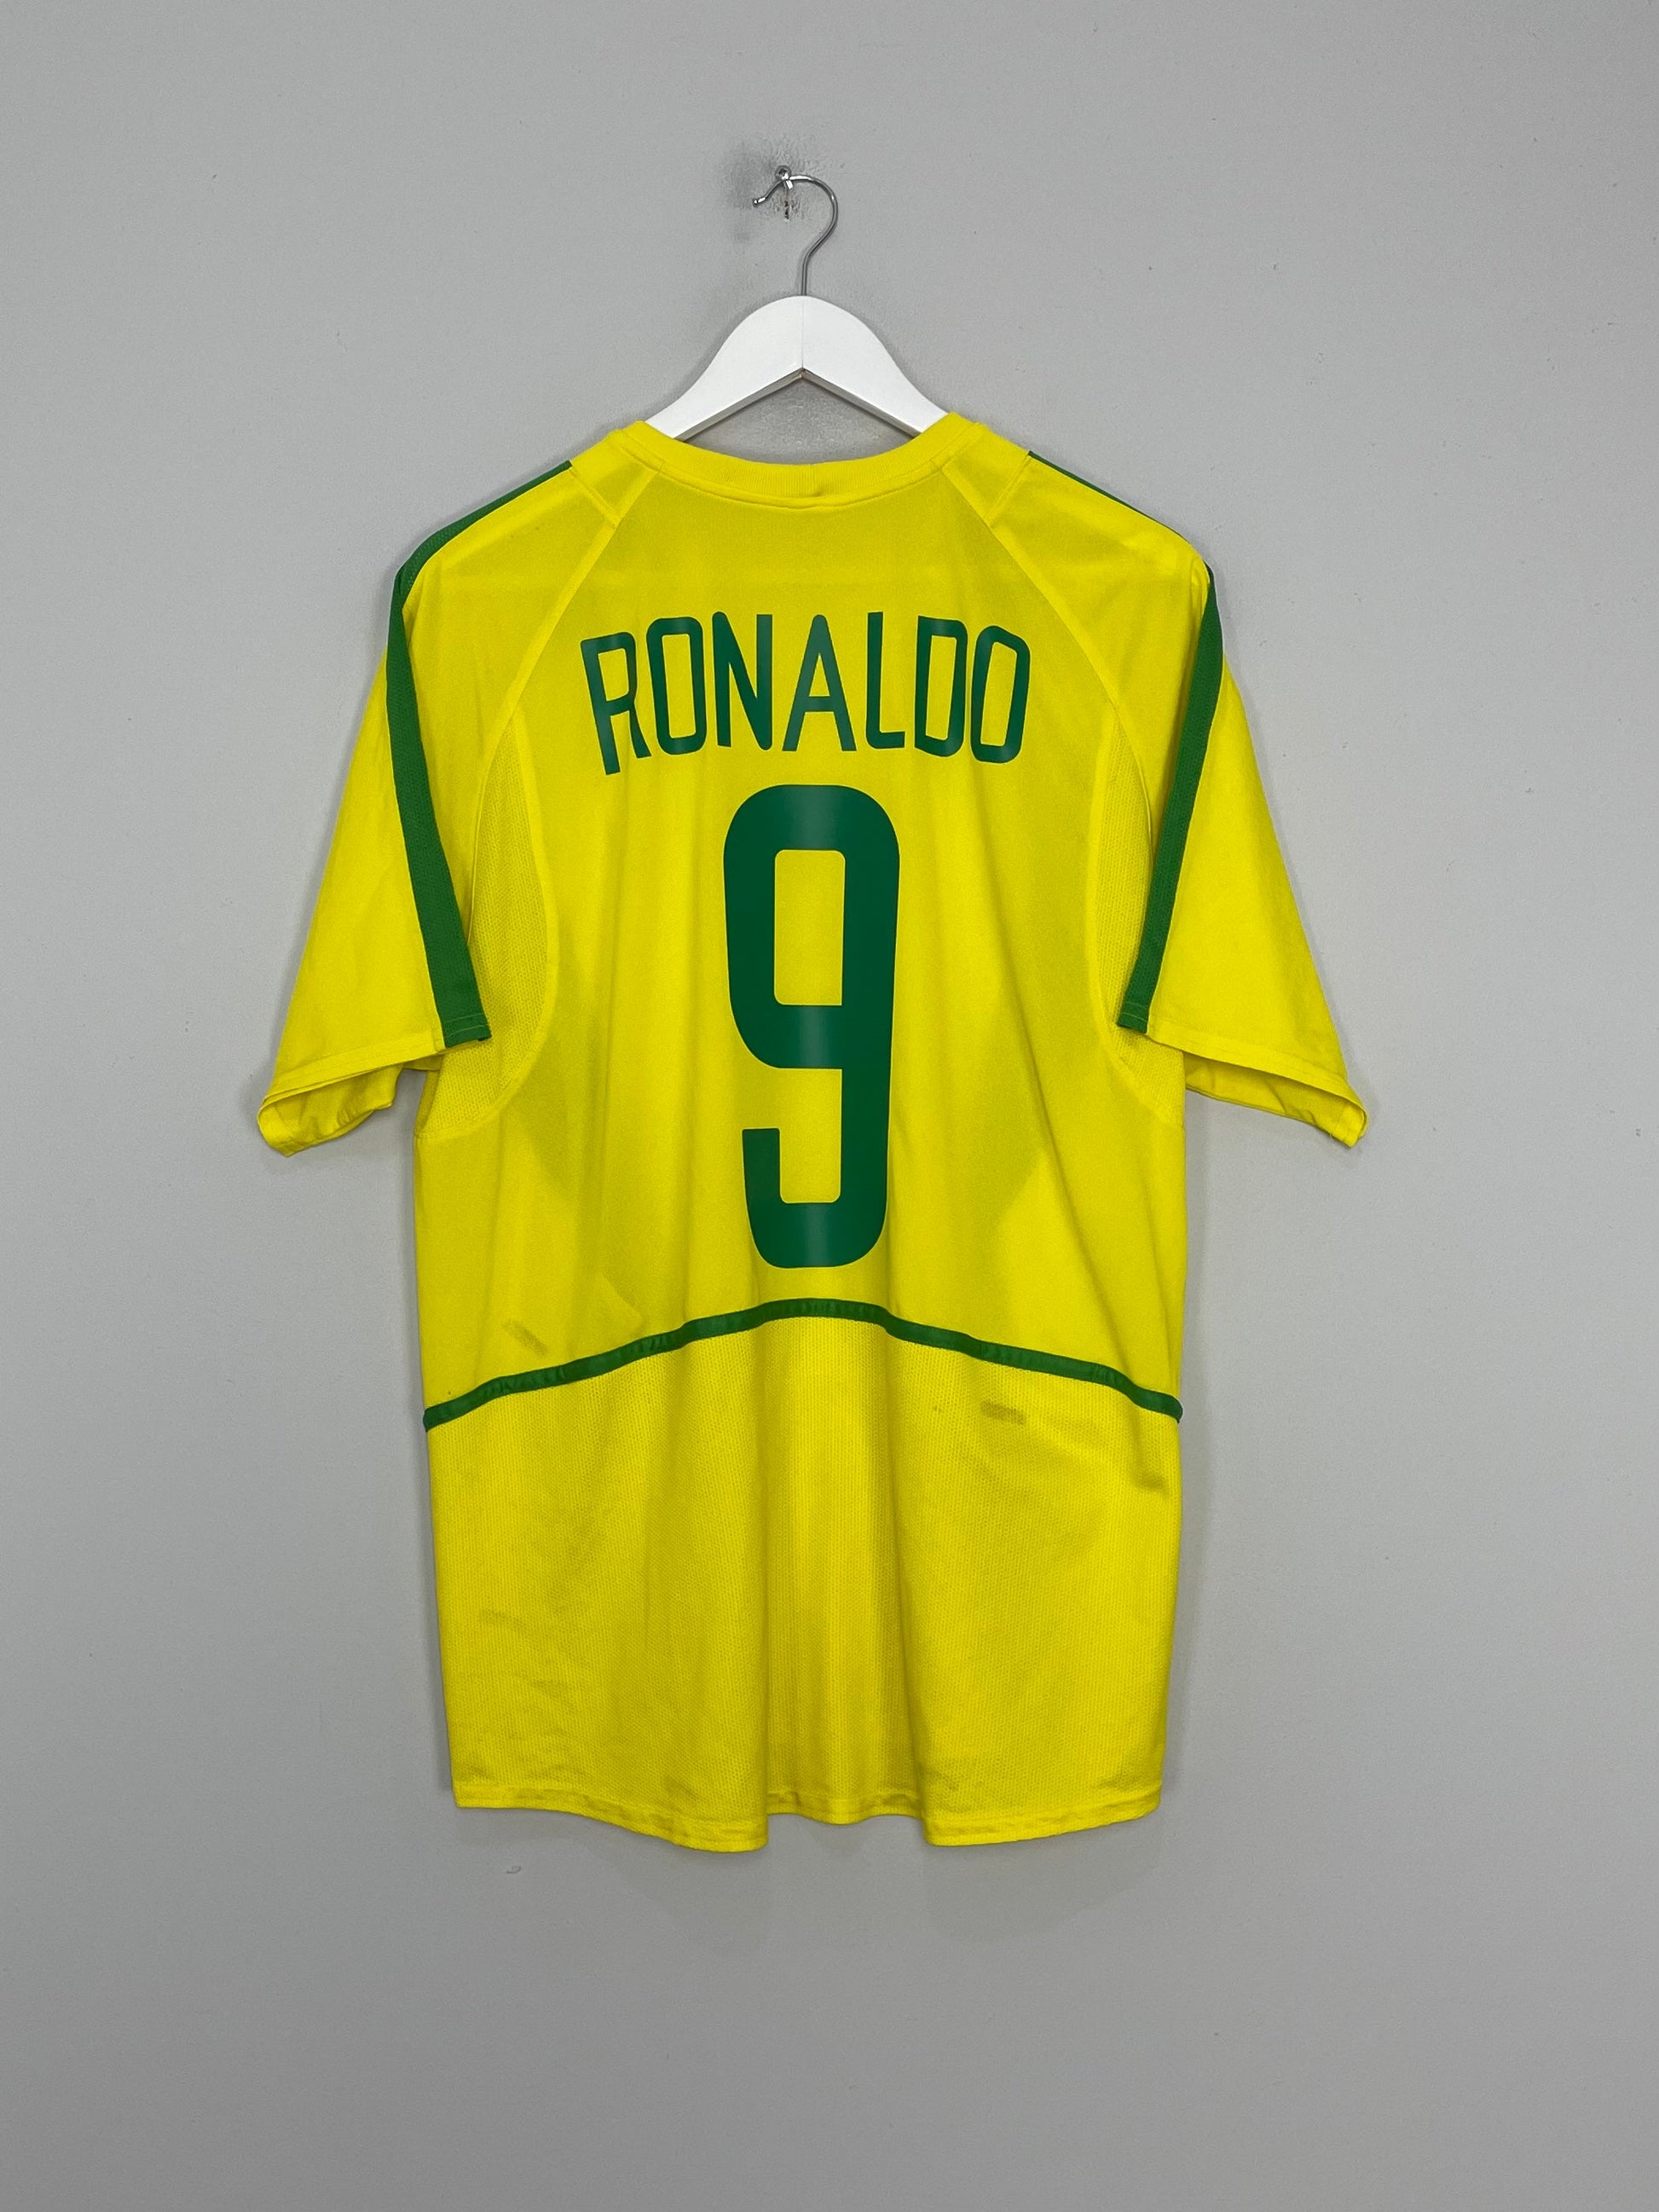 Image of the Brazil Ronaldo shirt from the 2002/04 season